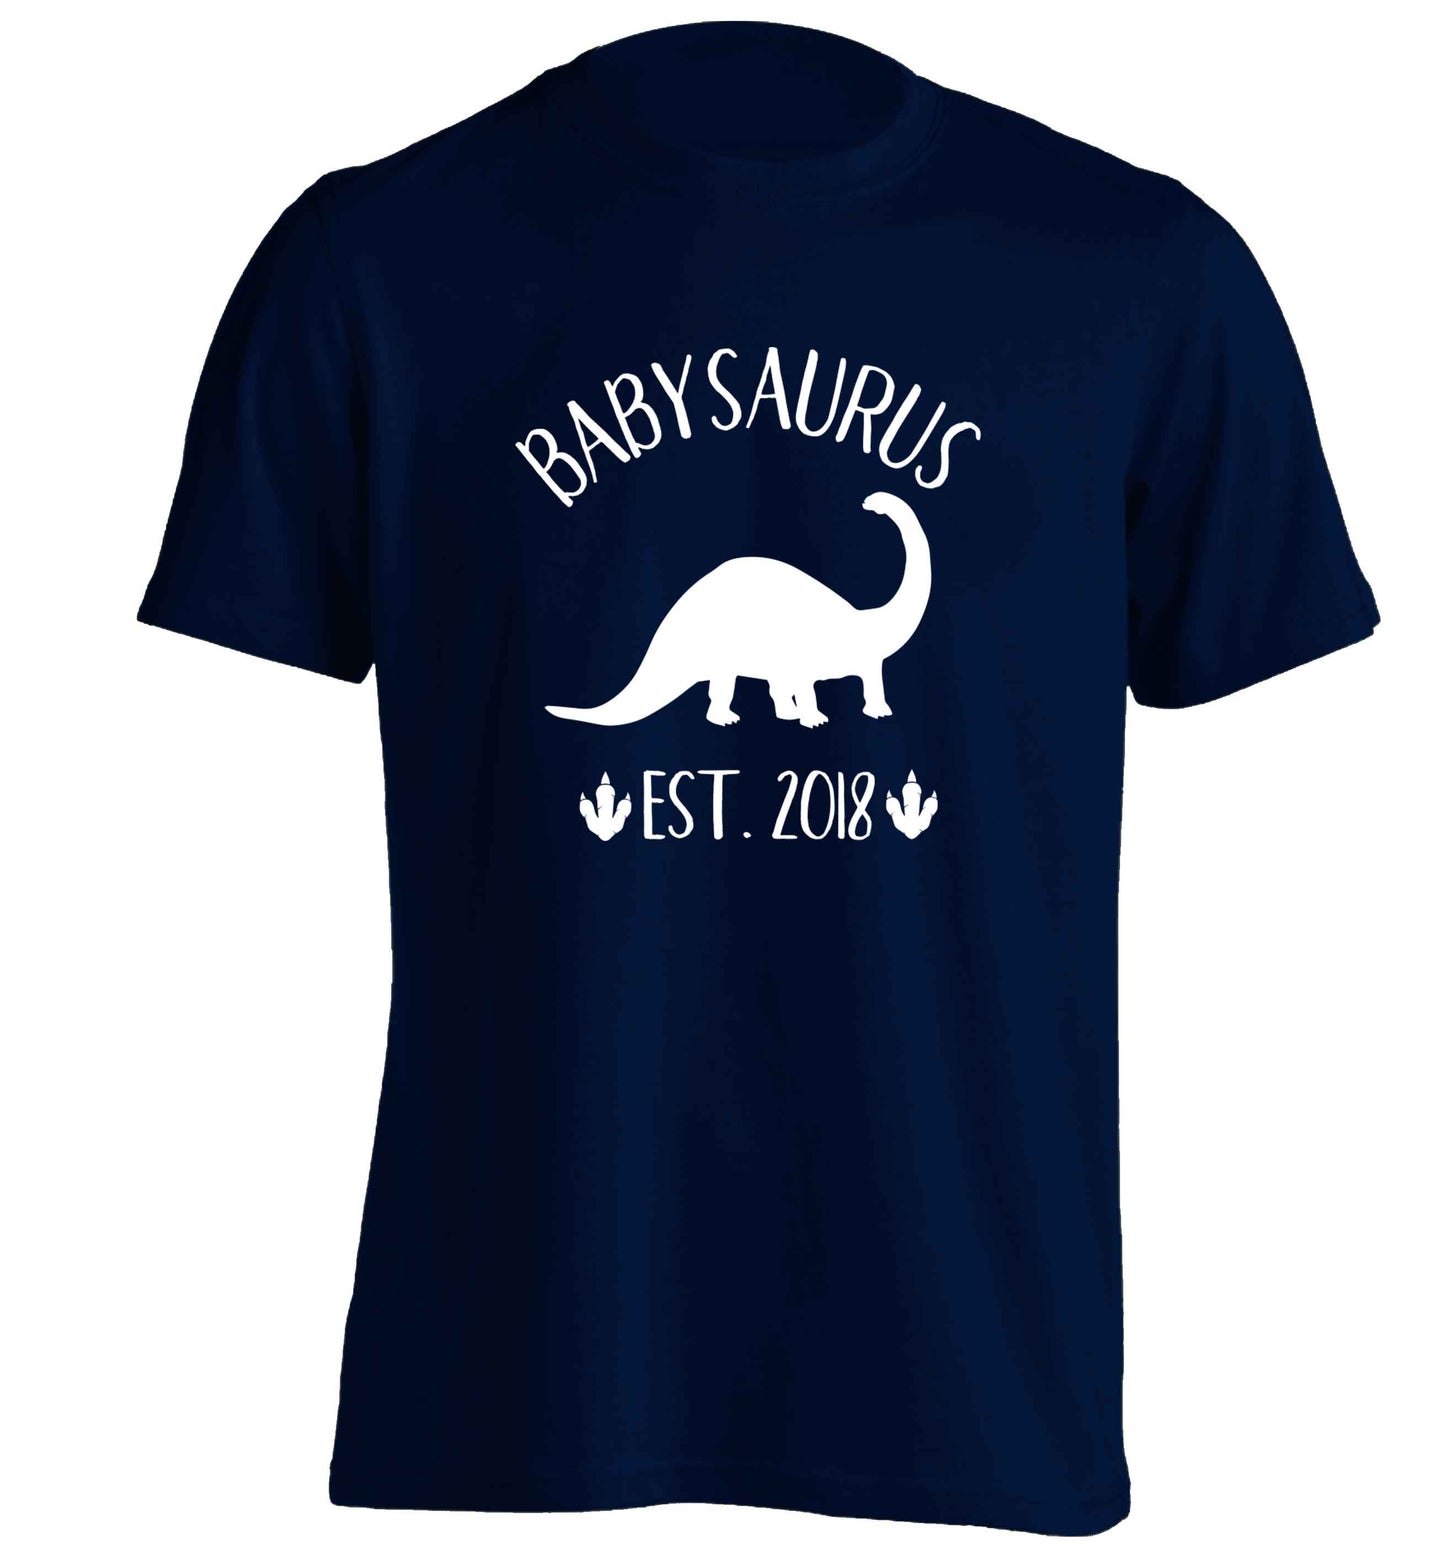 Personalised babysaurus since (custom date) adults unisex navy Tshirt 2XL